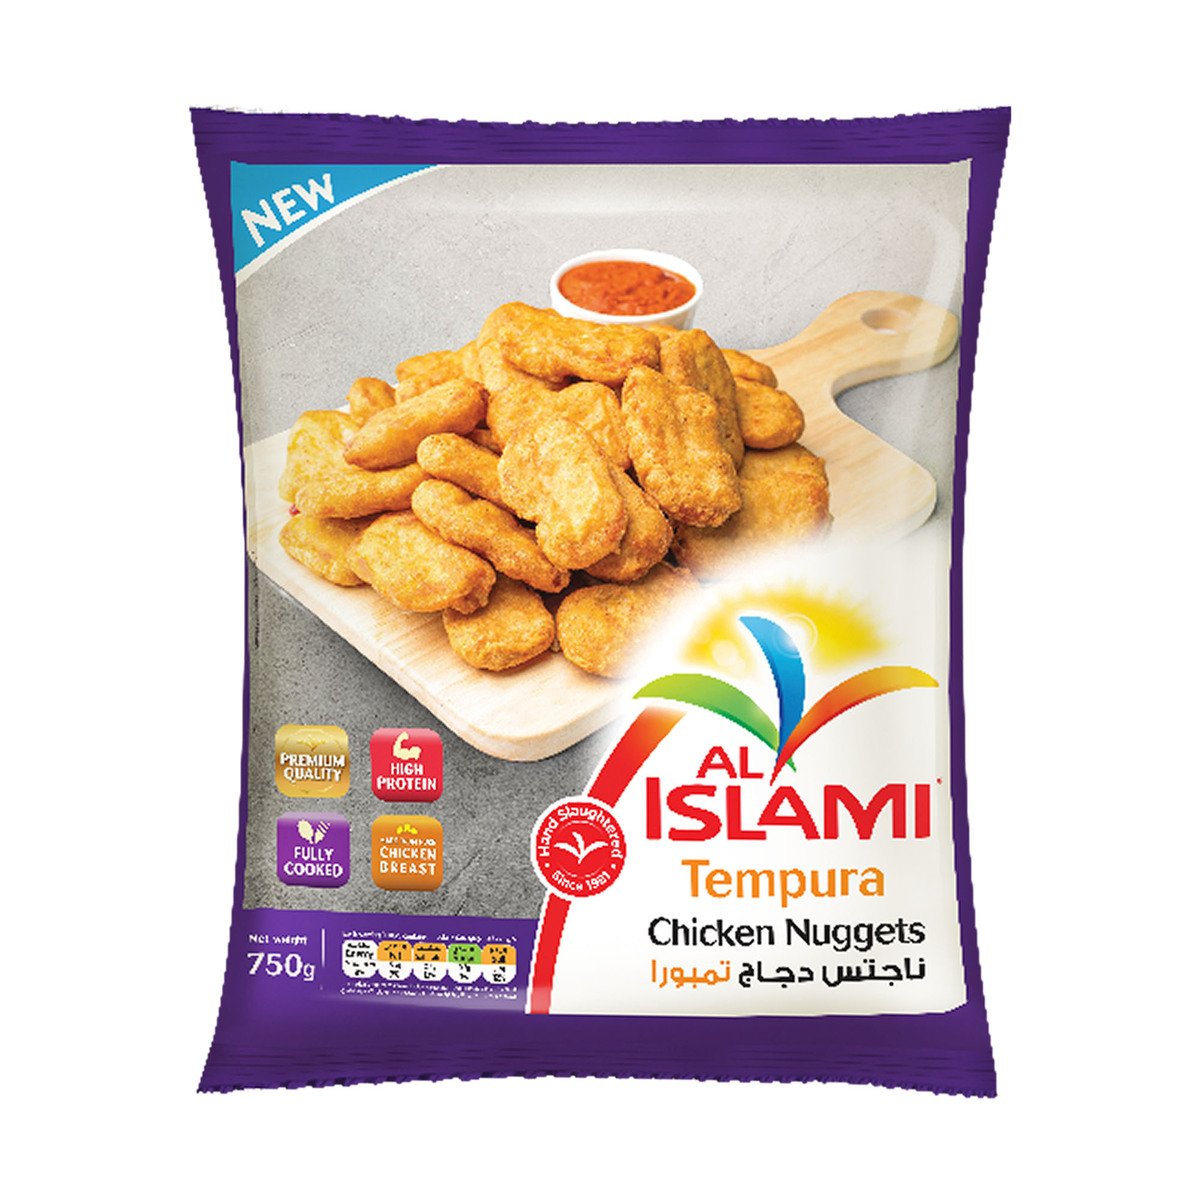 Al Islami Tempura Chicken Nuggets, 750 g